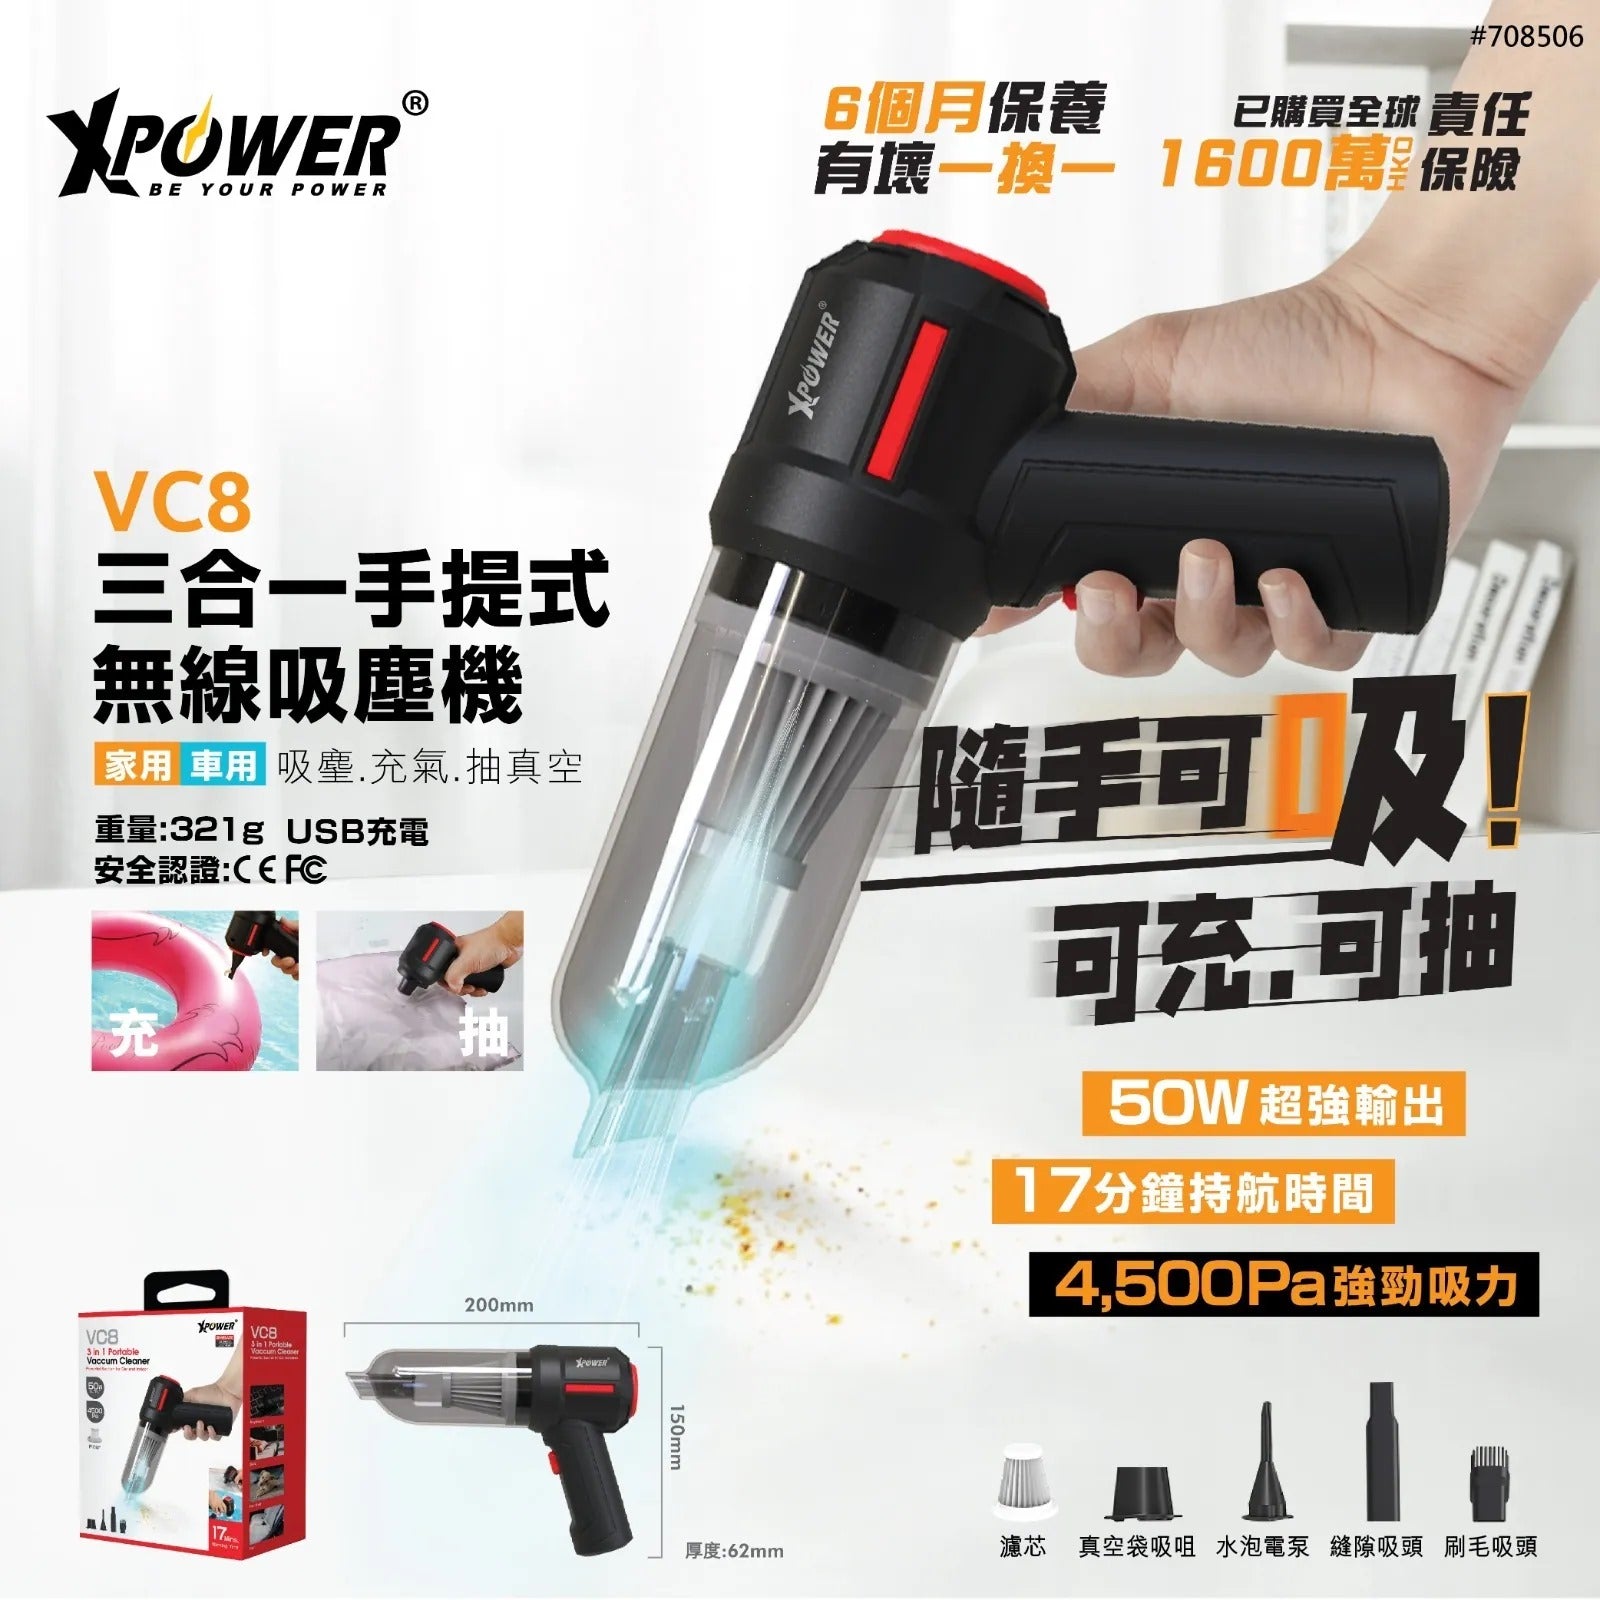 XPower VC8 3 In 1 Mini Wireless Vacuum Cleaner + Pump 4000mAh Battery - Black